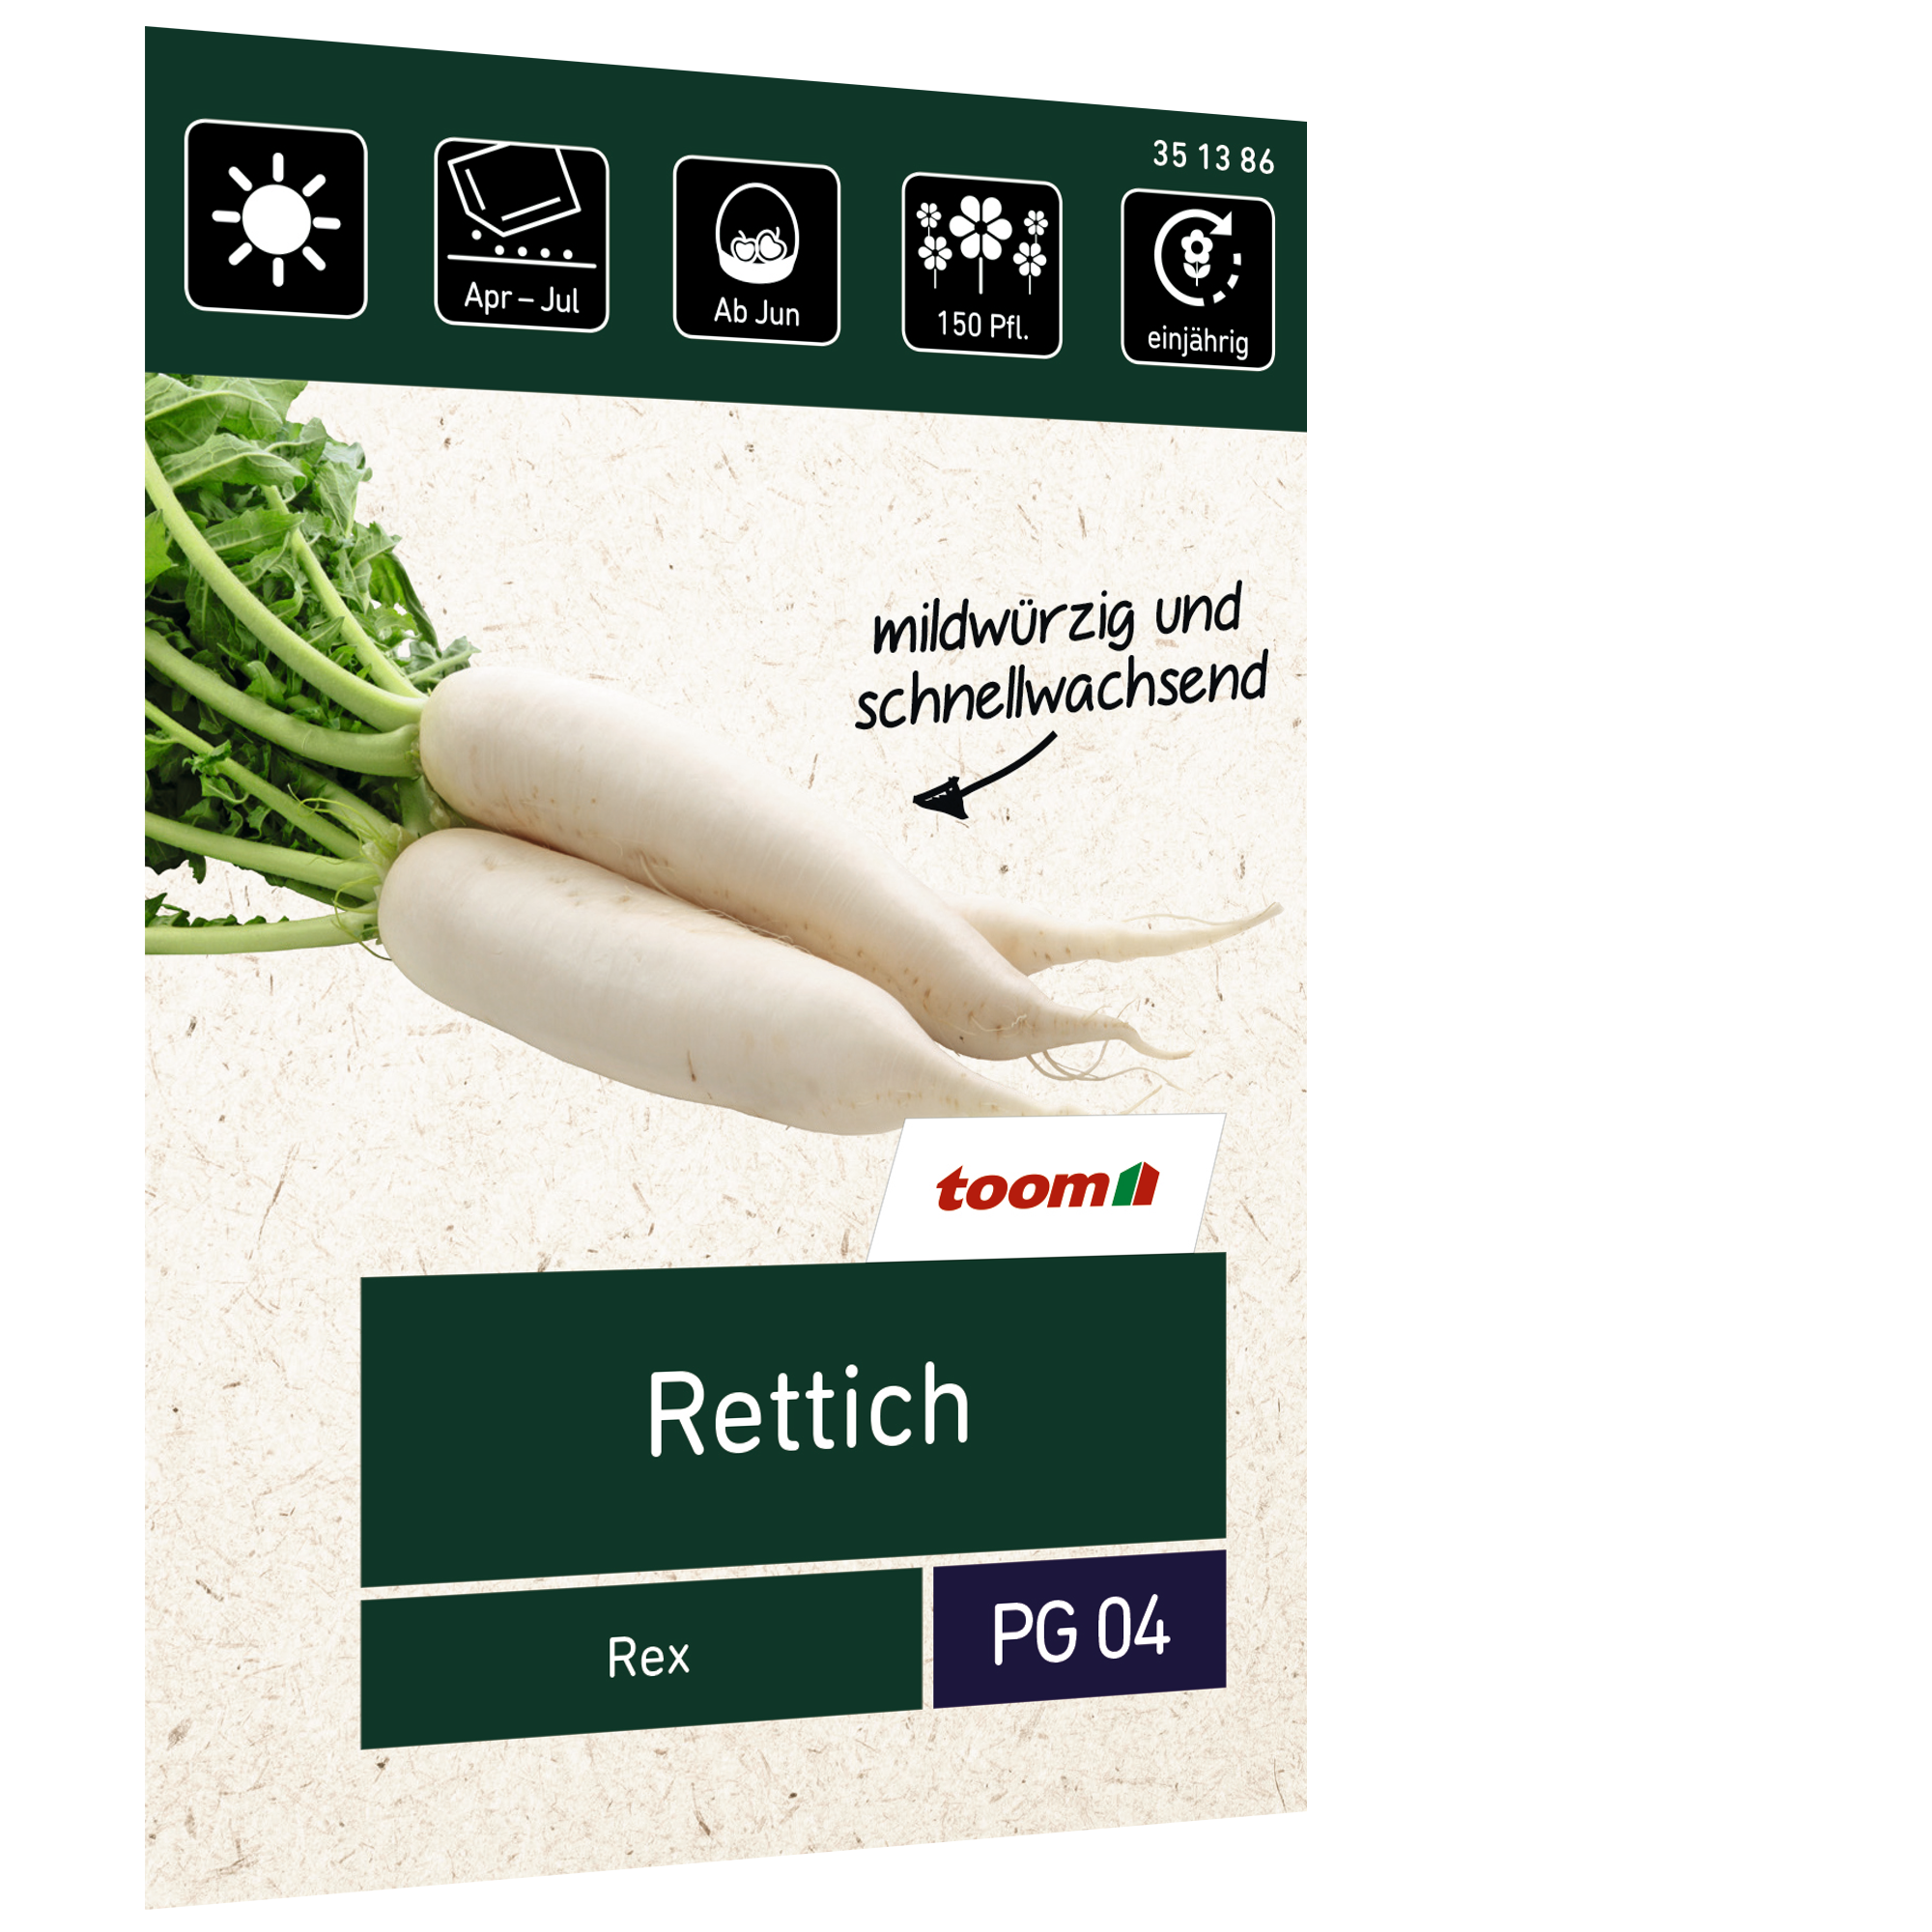 Rettich 'Rex' + product picture